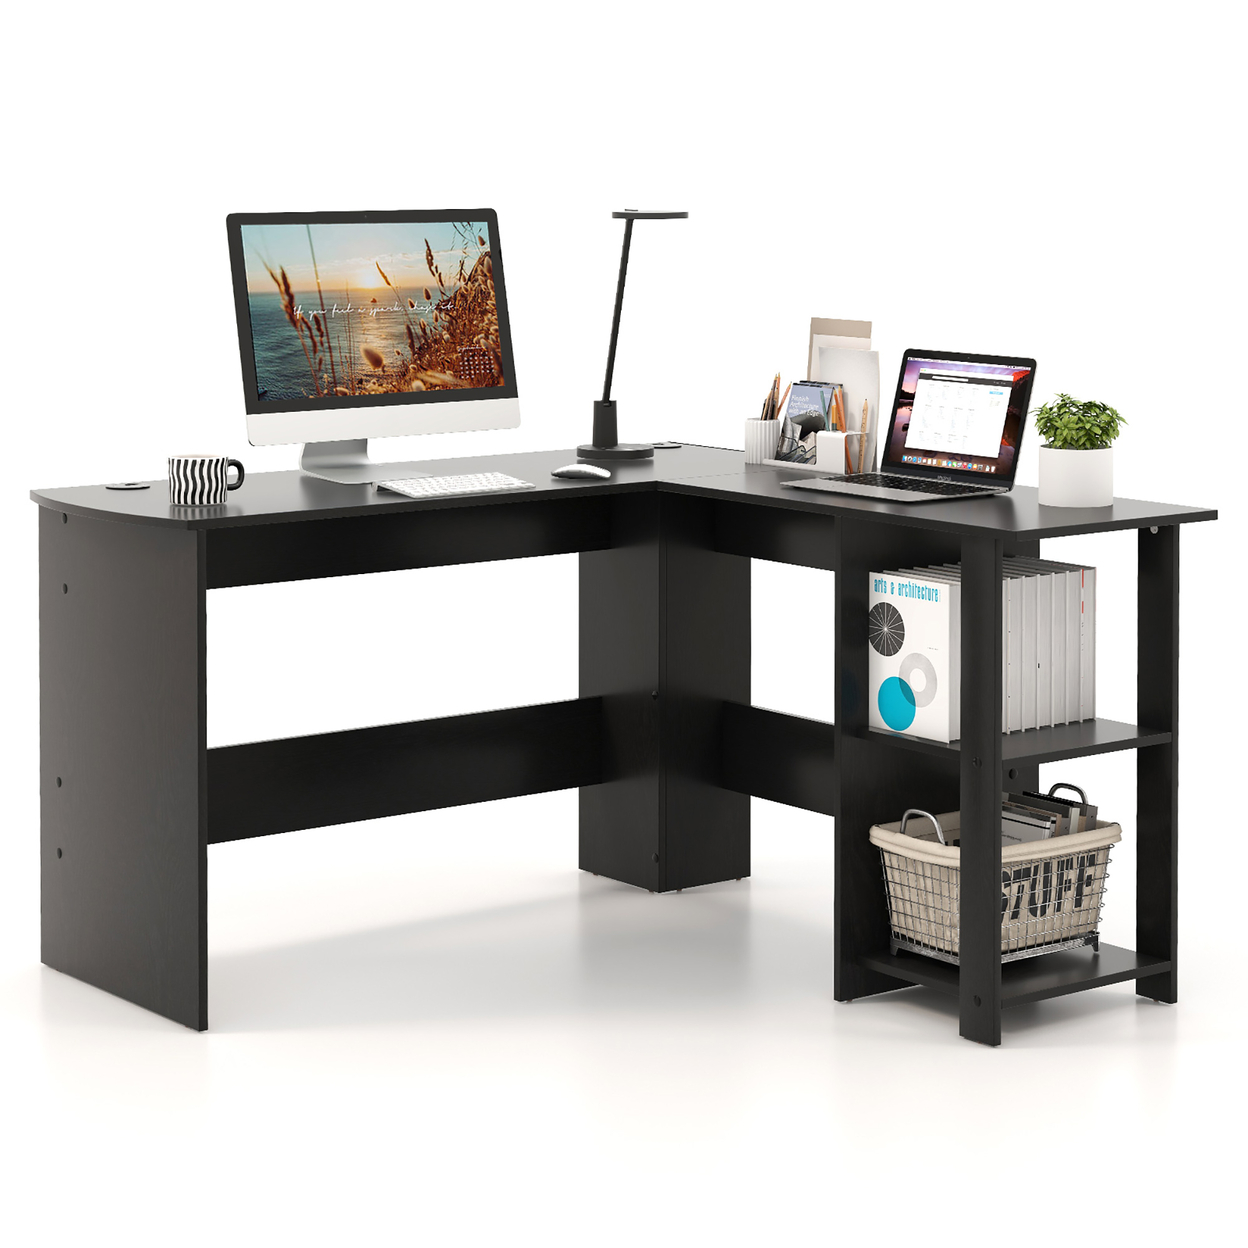 L-Shaped Computer Desk For Small Space Corner Home Office Desk W/ Shelves Black